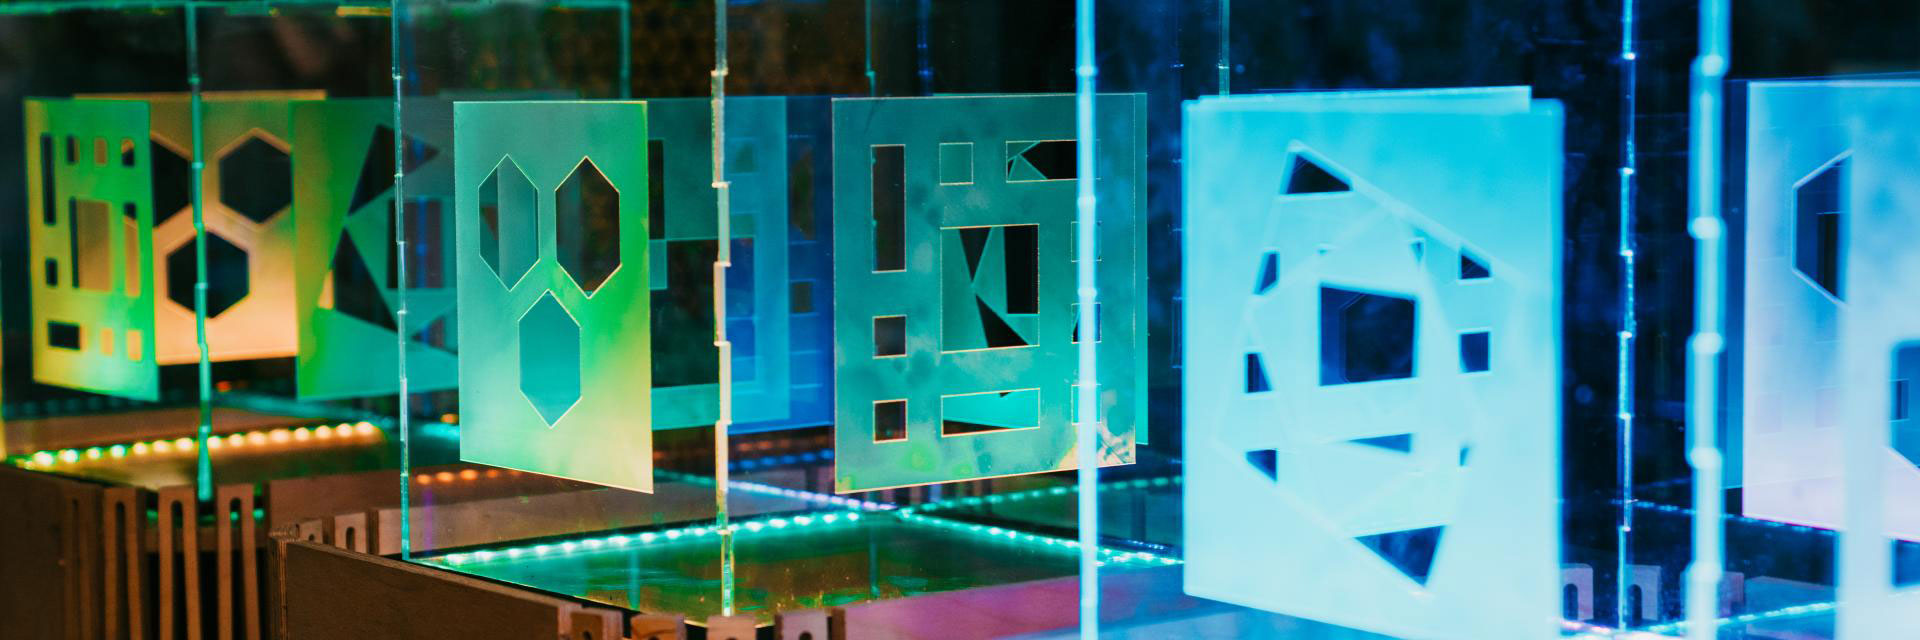 In a colorful public art installation, lasercut plexiglass cubes light up with the five symbols representing the five design behaviors taught in Design Bloc.